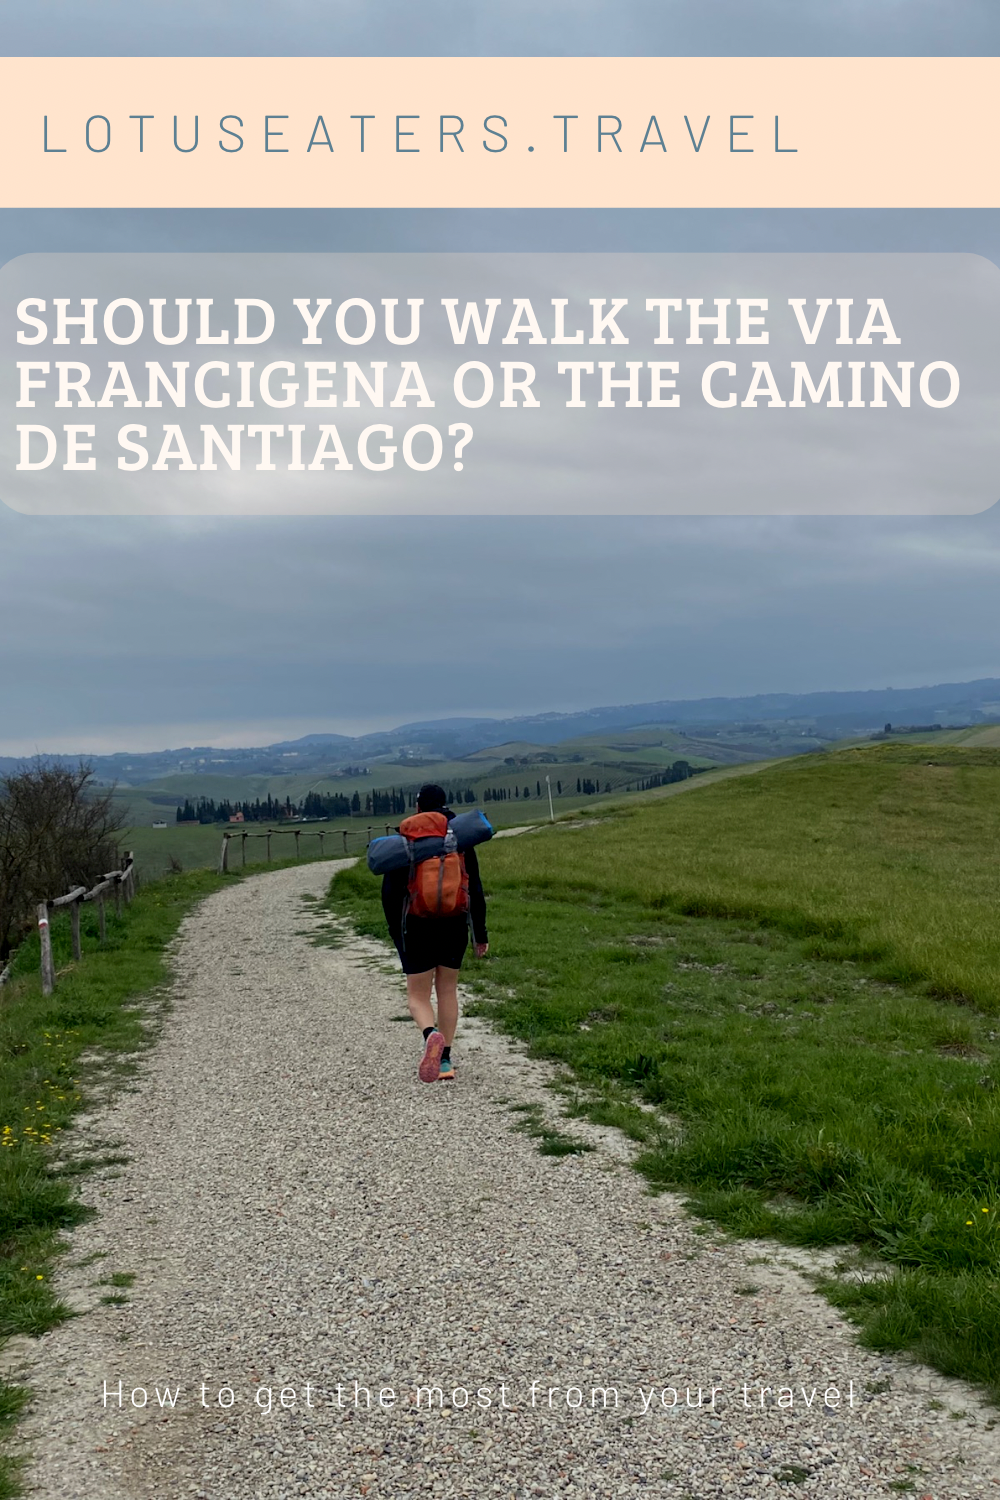 Should you walk the Via Francigena or the Camino de Santiago?